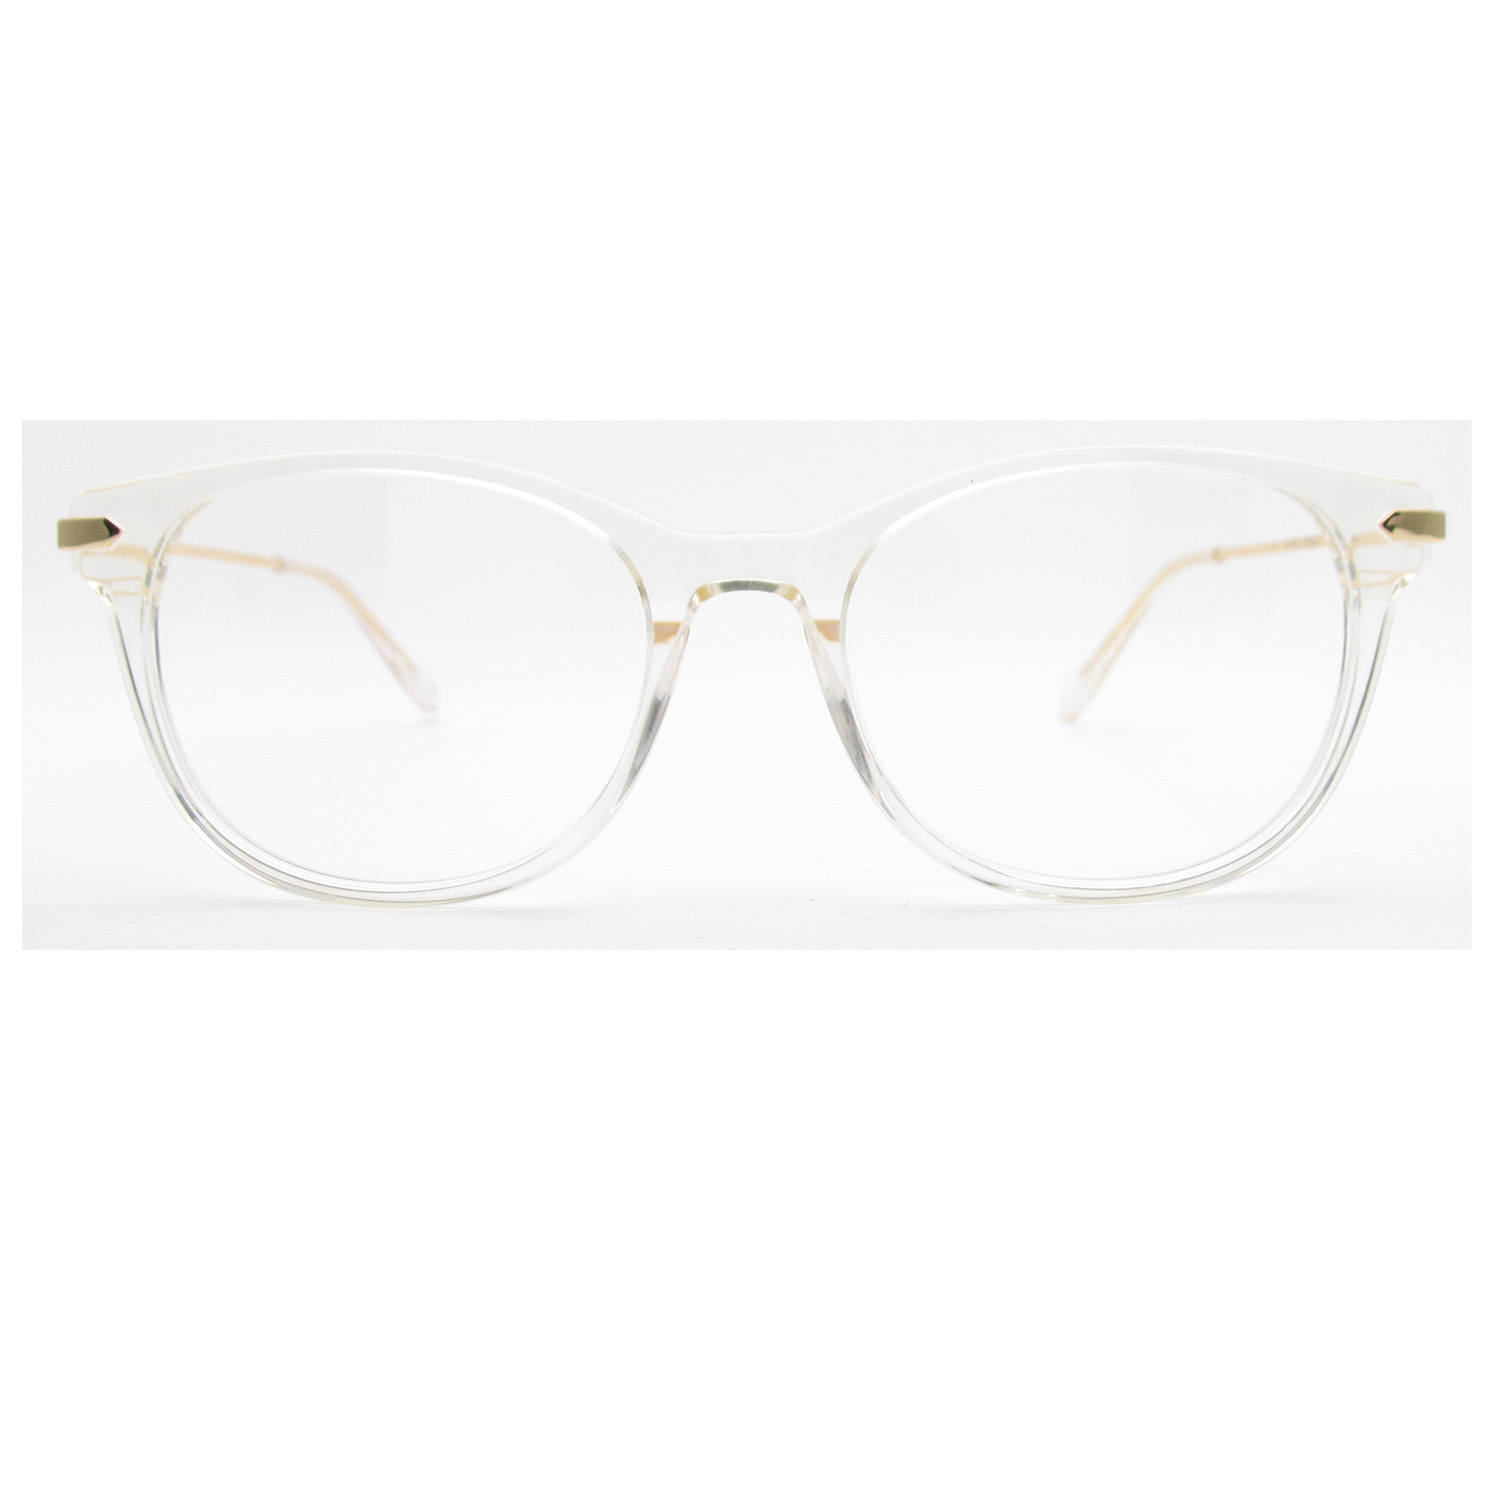 Walmart Women's Rx'able Eyeglasses, Wop69, Crystal Gold, 51-17-145 - image 2 of 7